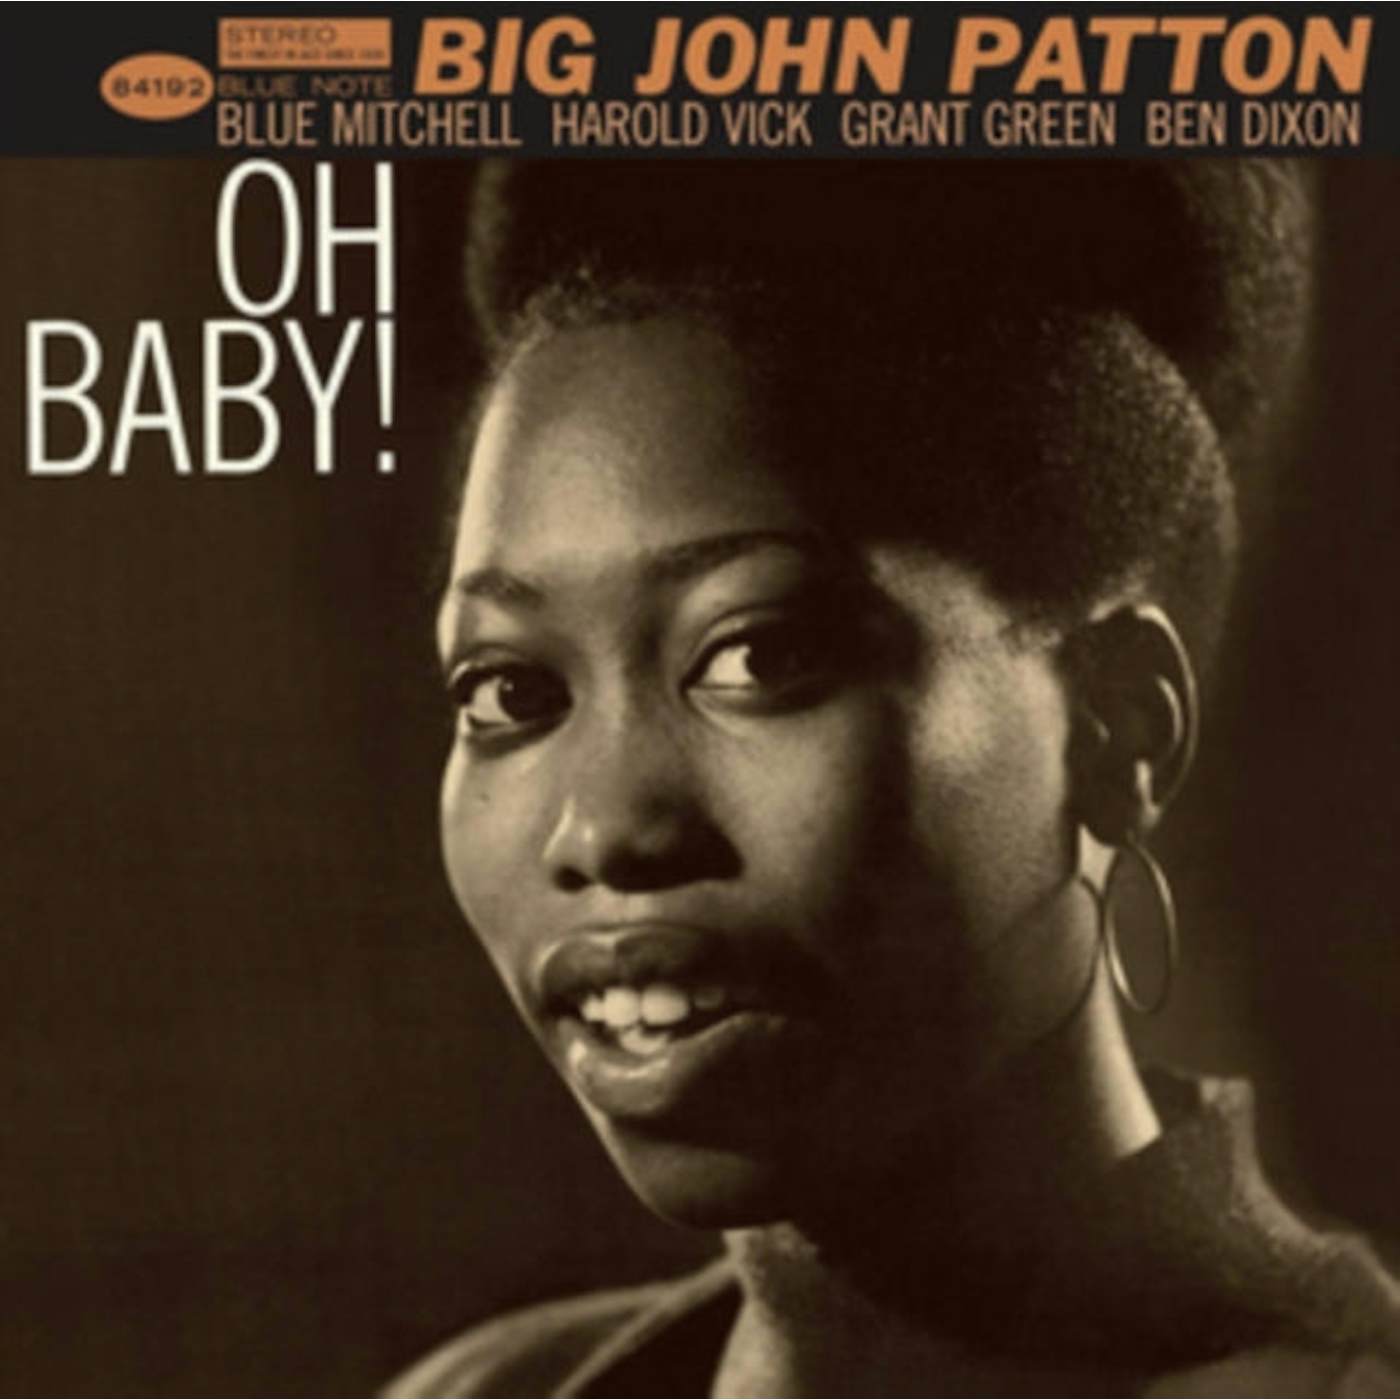 Big John Patton LP - Oh Baby! (Feat. Grant Green & Blue Mitchell) (Vinyl)